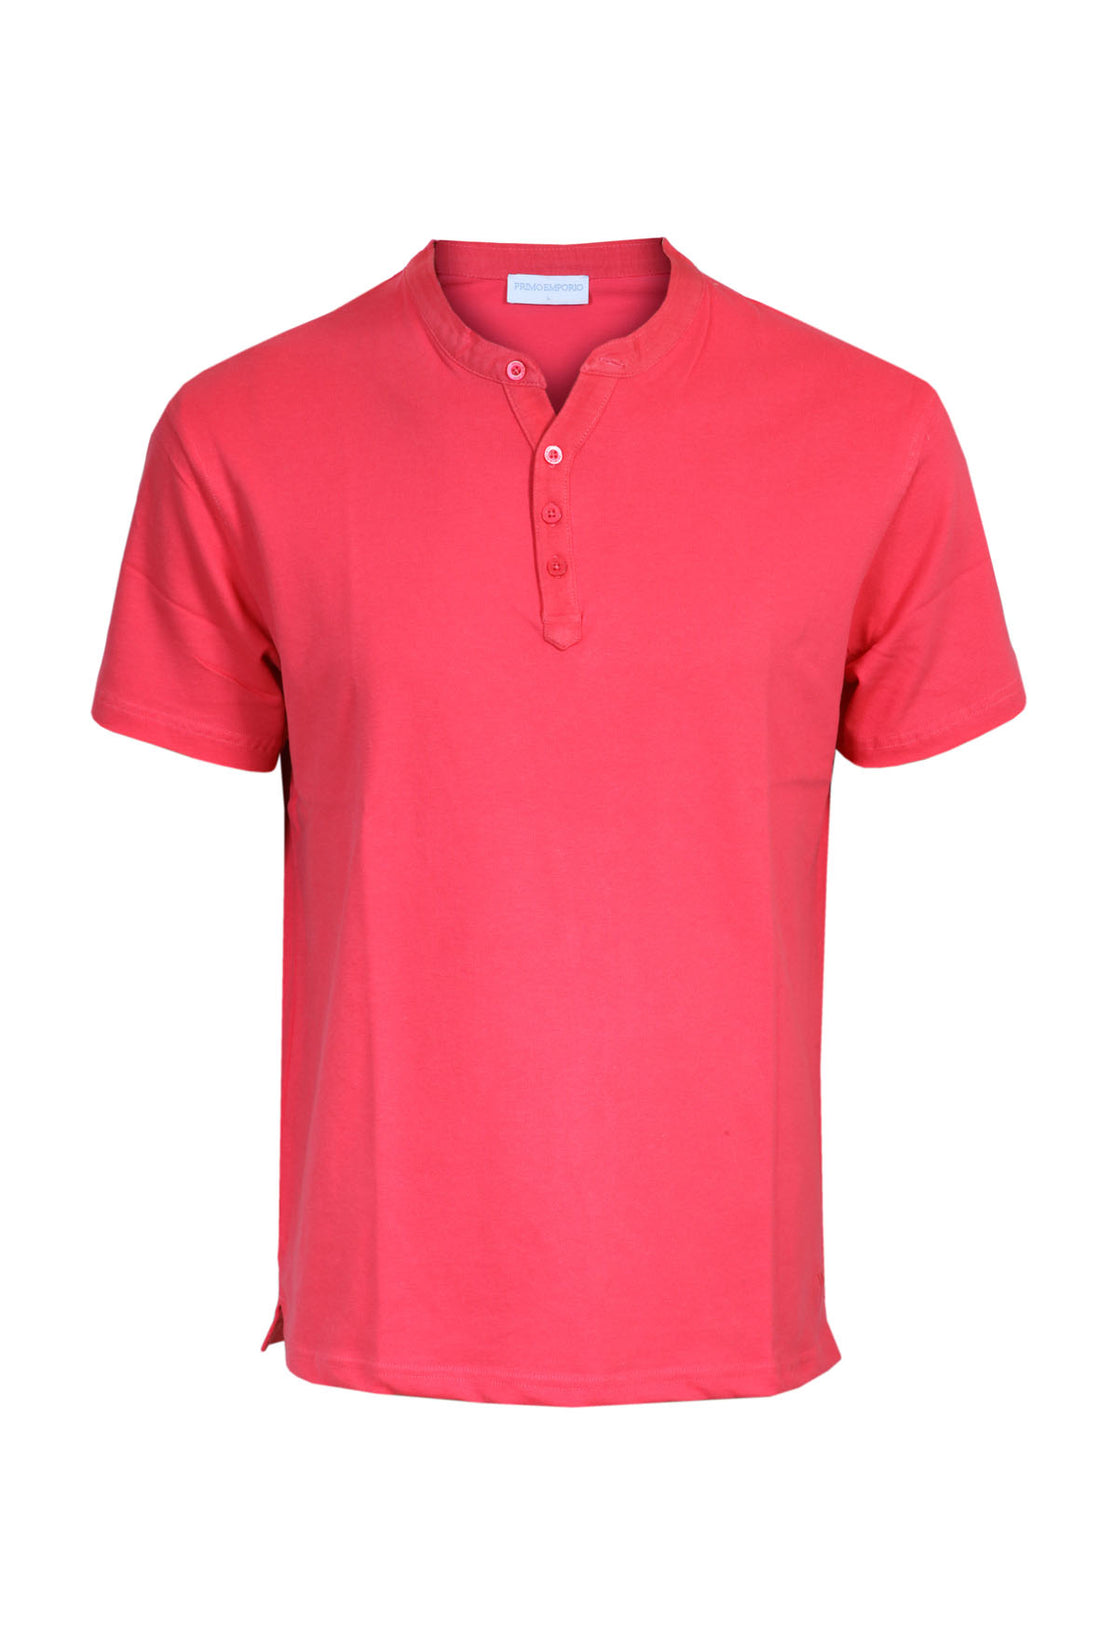 Serafino Half Sleeve Cotton T-Shirt - Coral